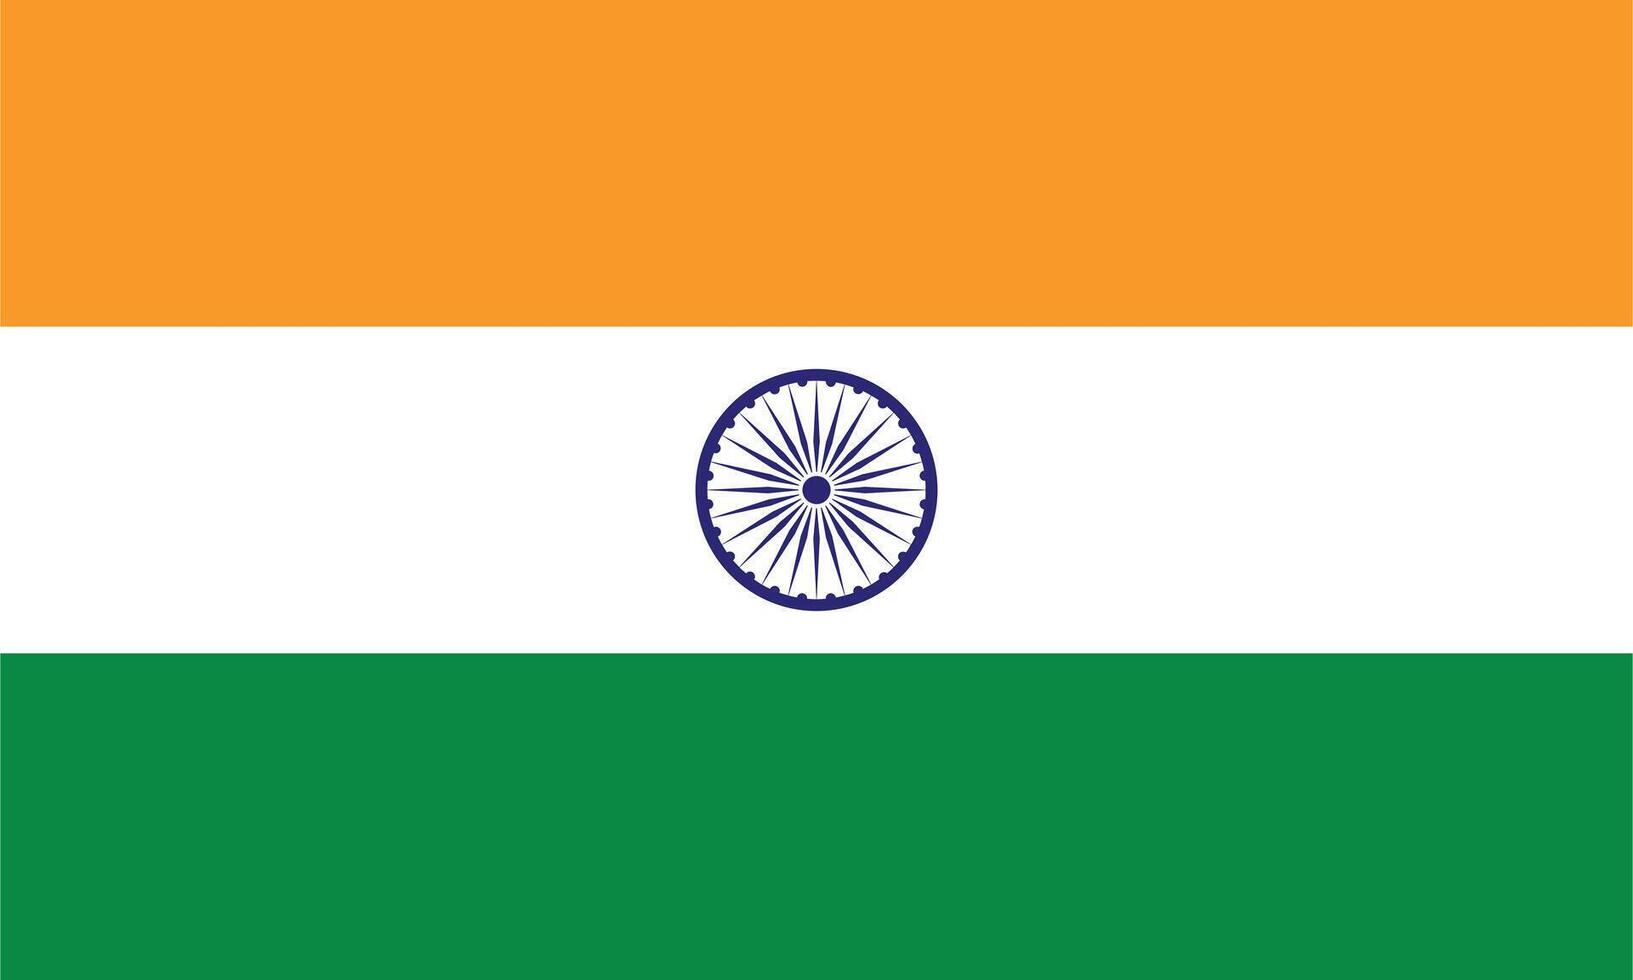 Flat Illustration of the India flag. India national flag design. vector